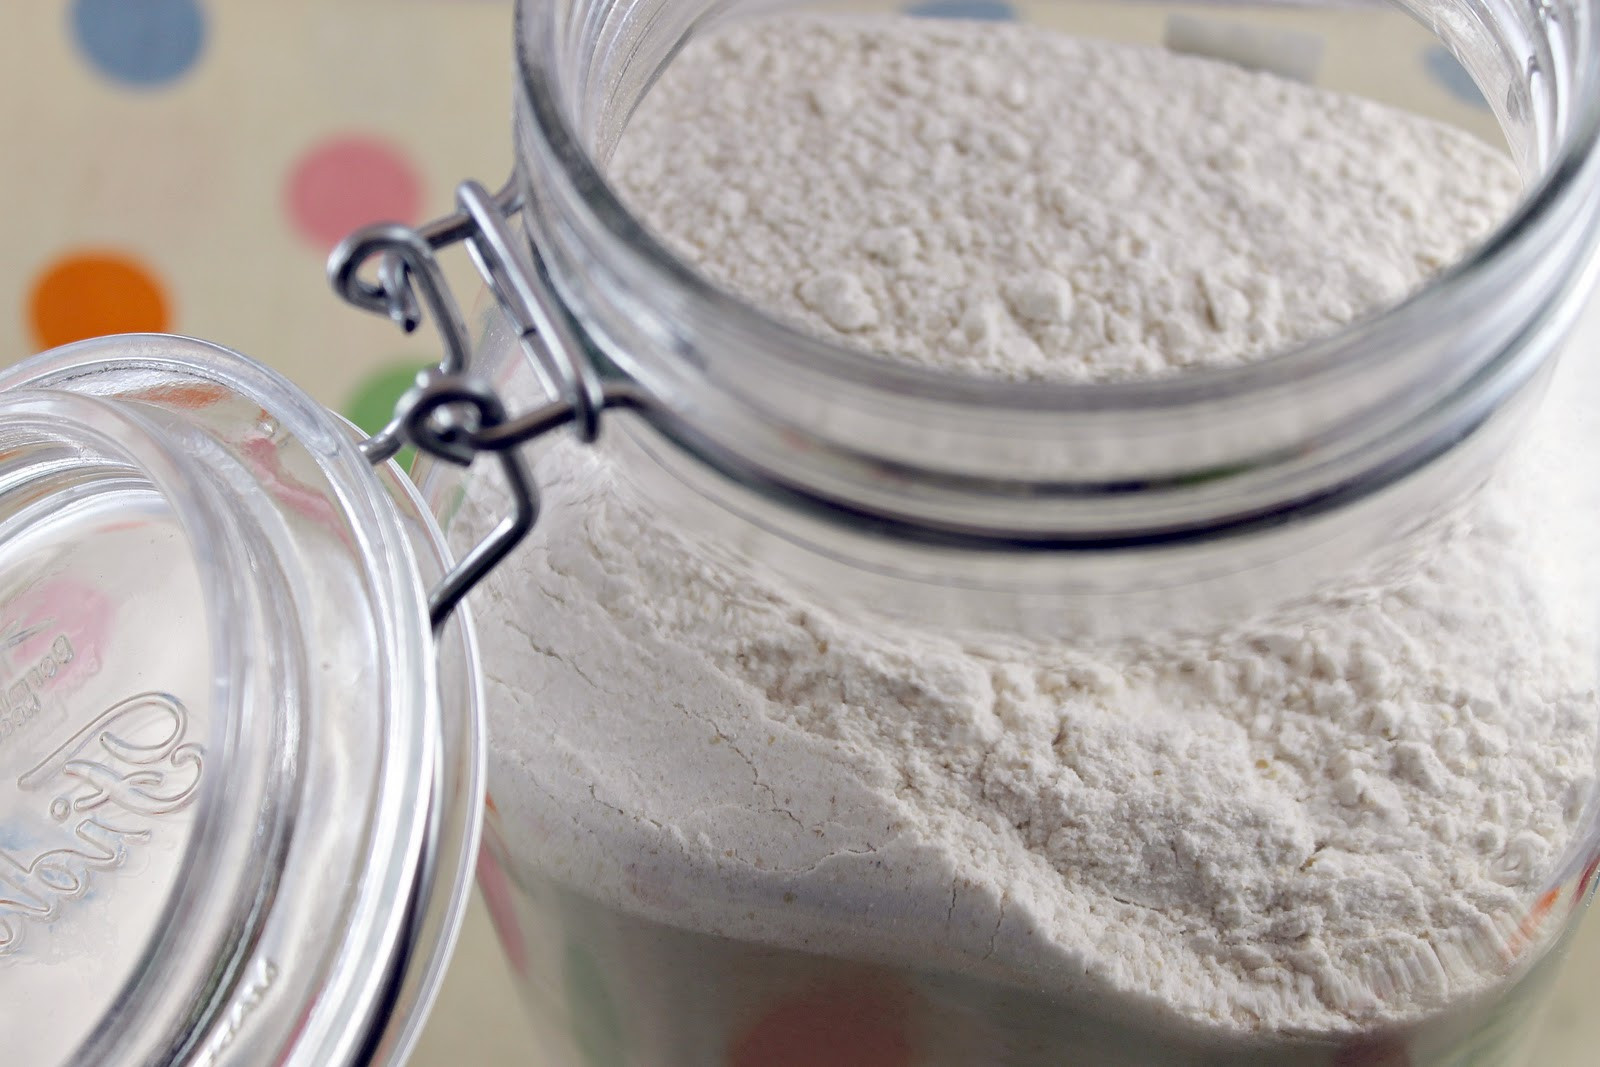 Best ideas about DIY Baking Powder
. Save or Pin Homemade Aluminum Free Baking Powder Now.